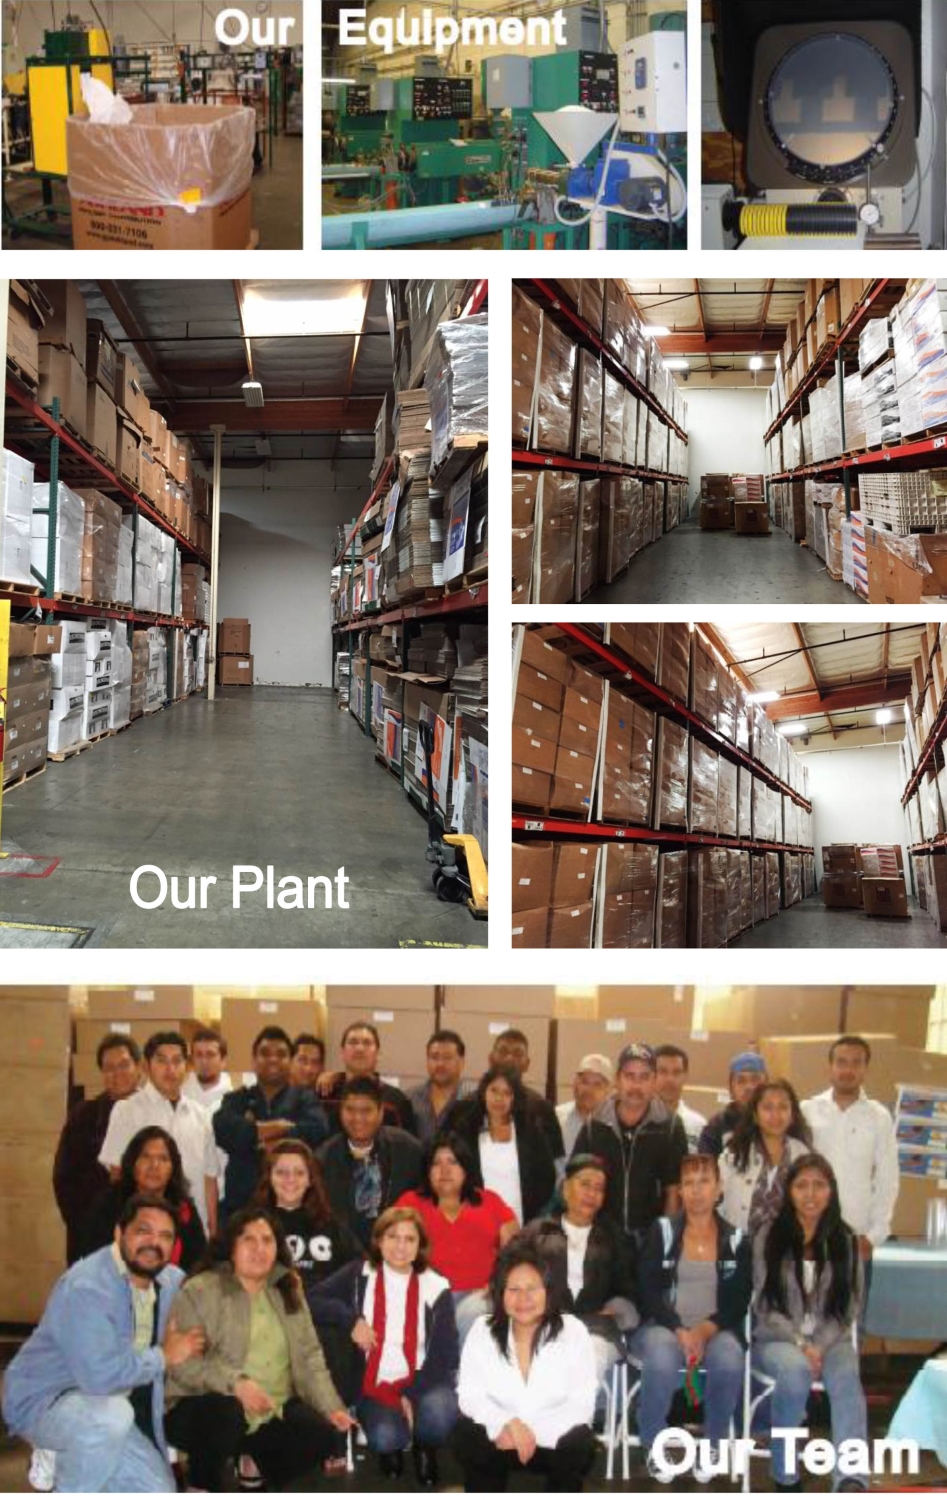 Made-in-California-Manufacturer-Amflex-Equipment-Plant-and-Team-Pix-5x316